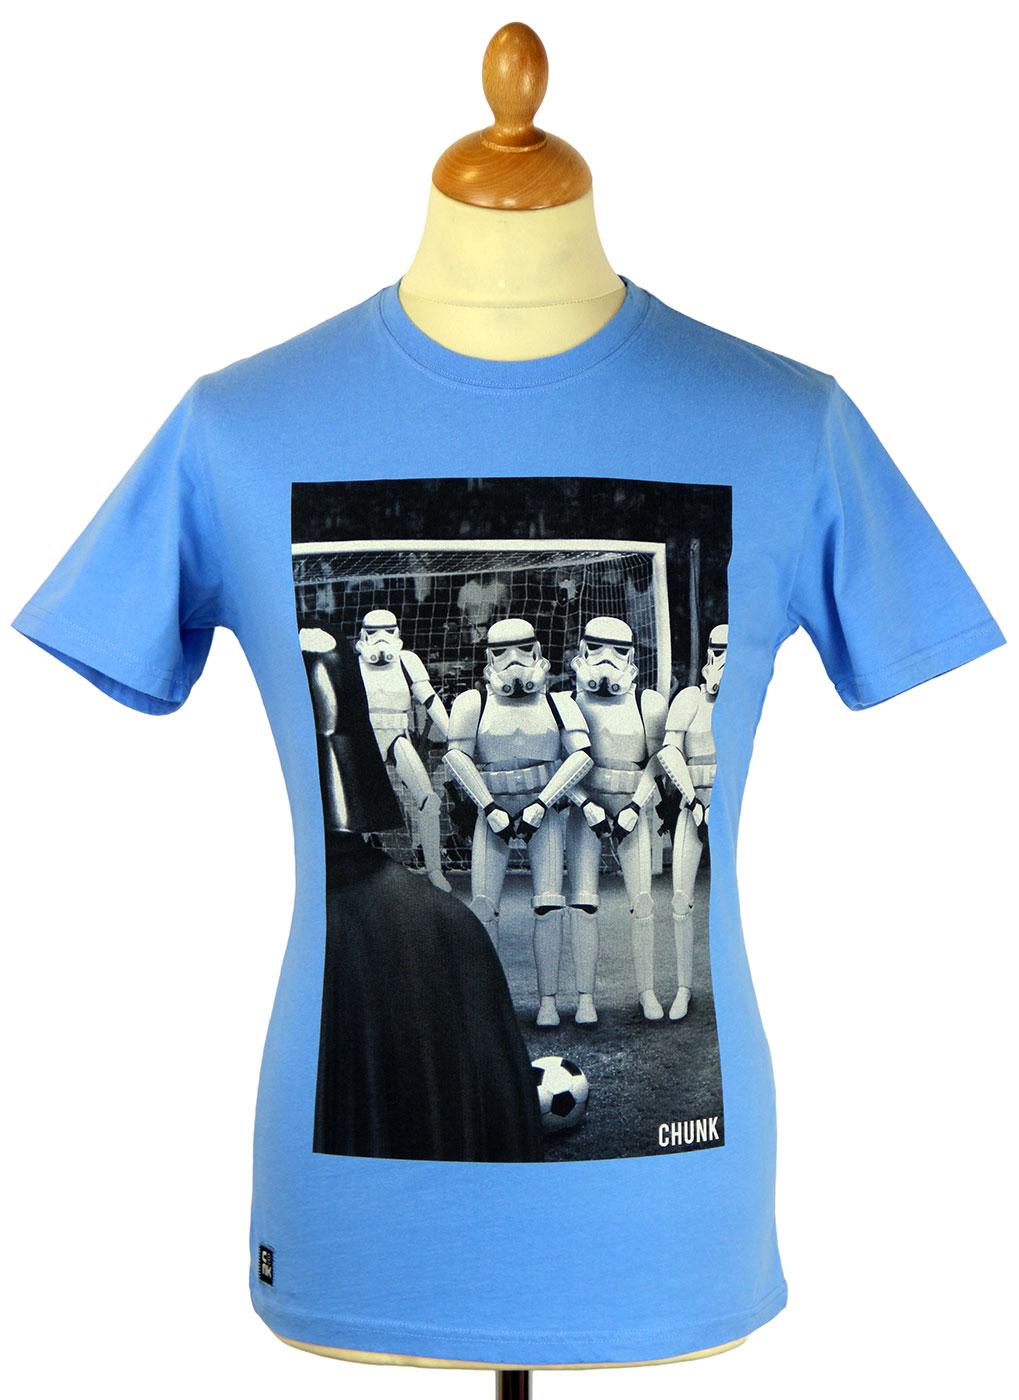 Free Kick CHUNK Retro Star Wars Football T-Shirt